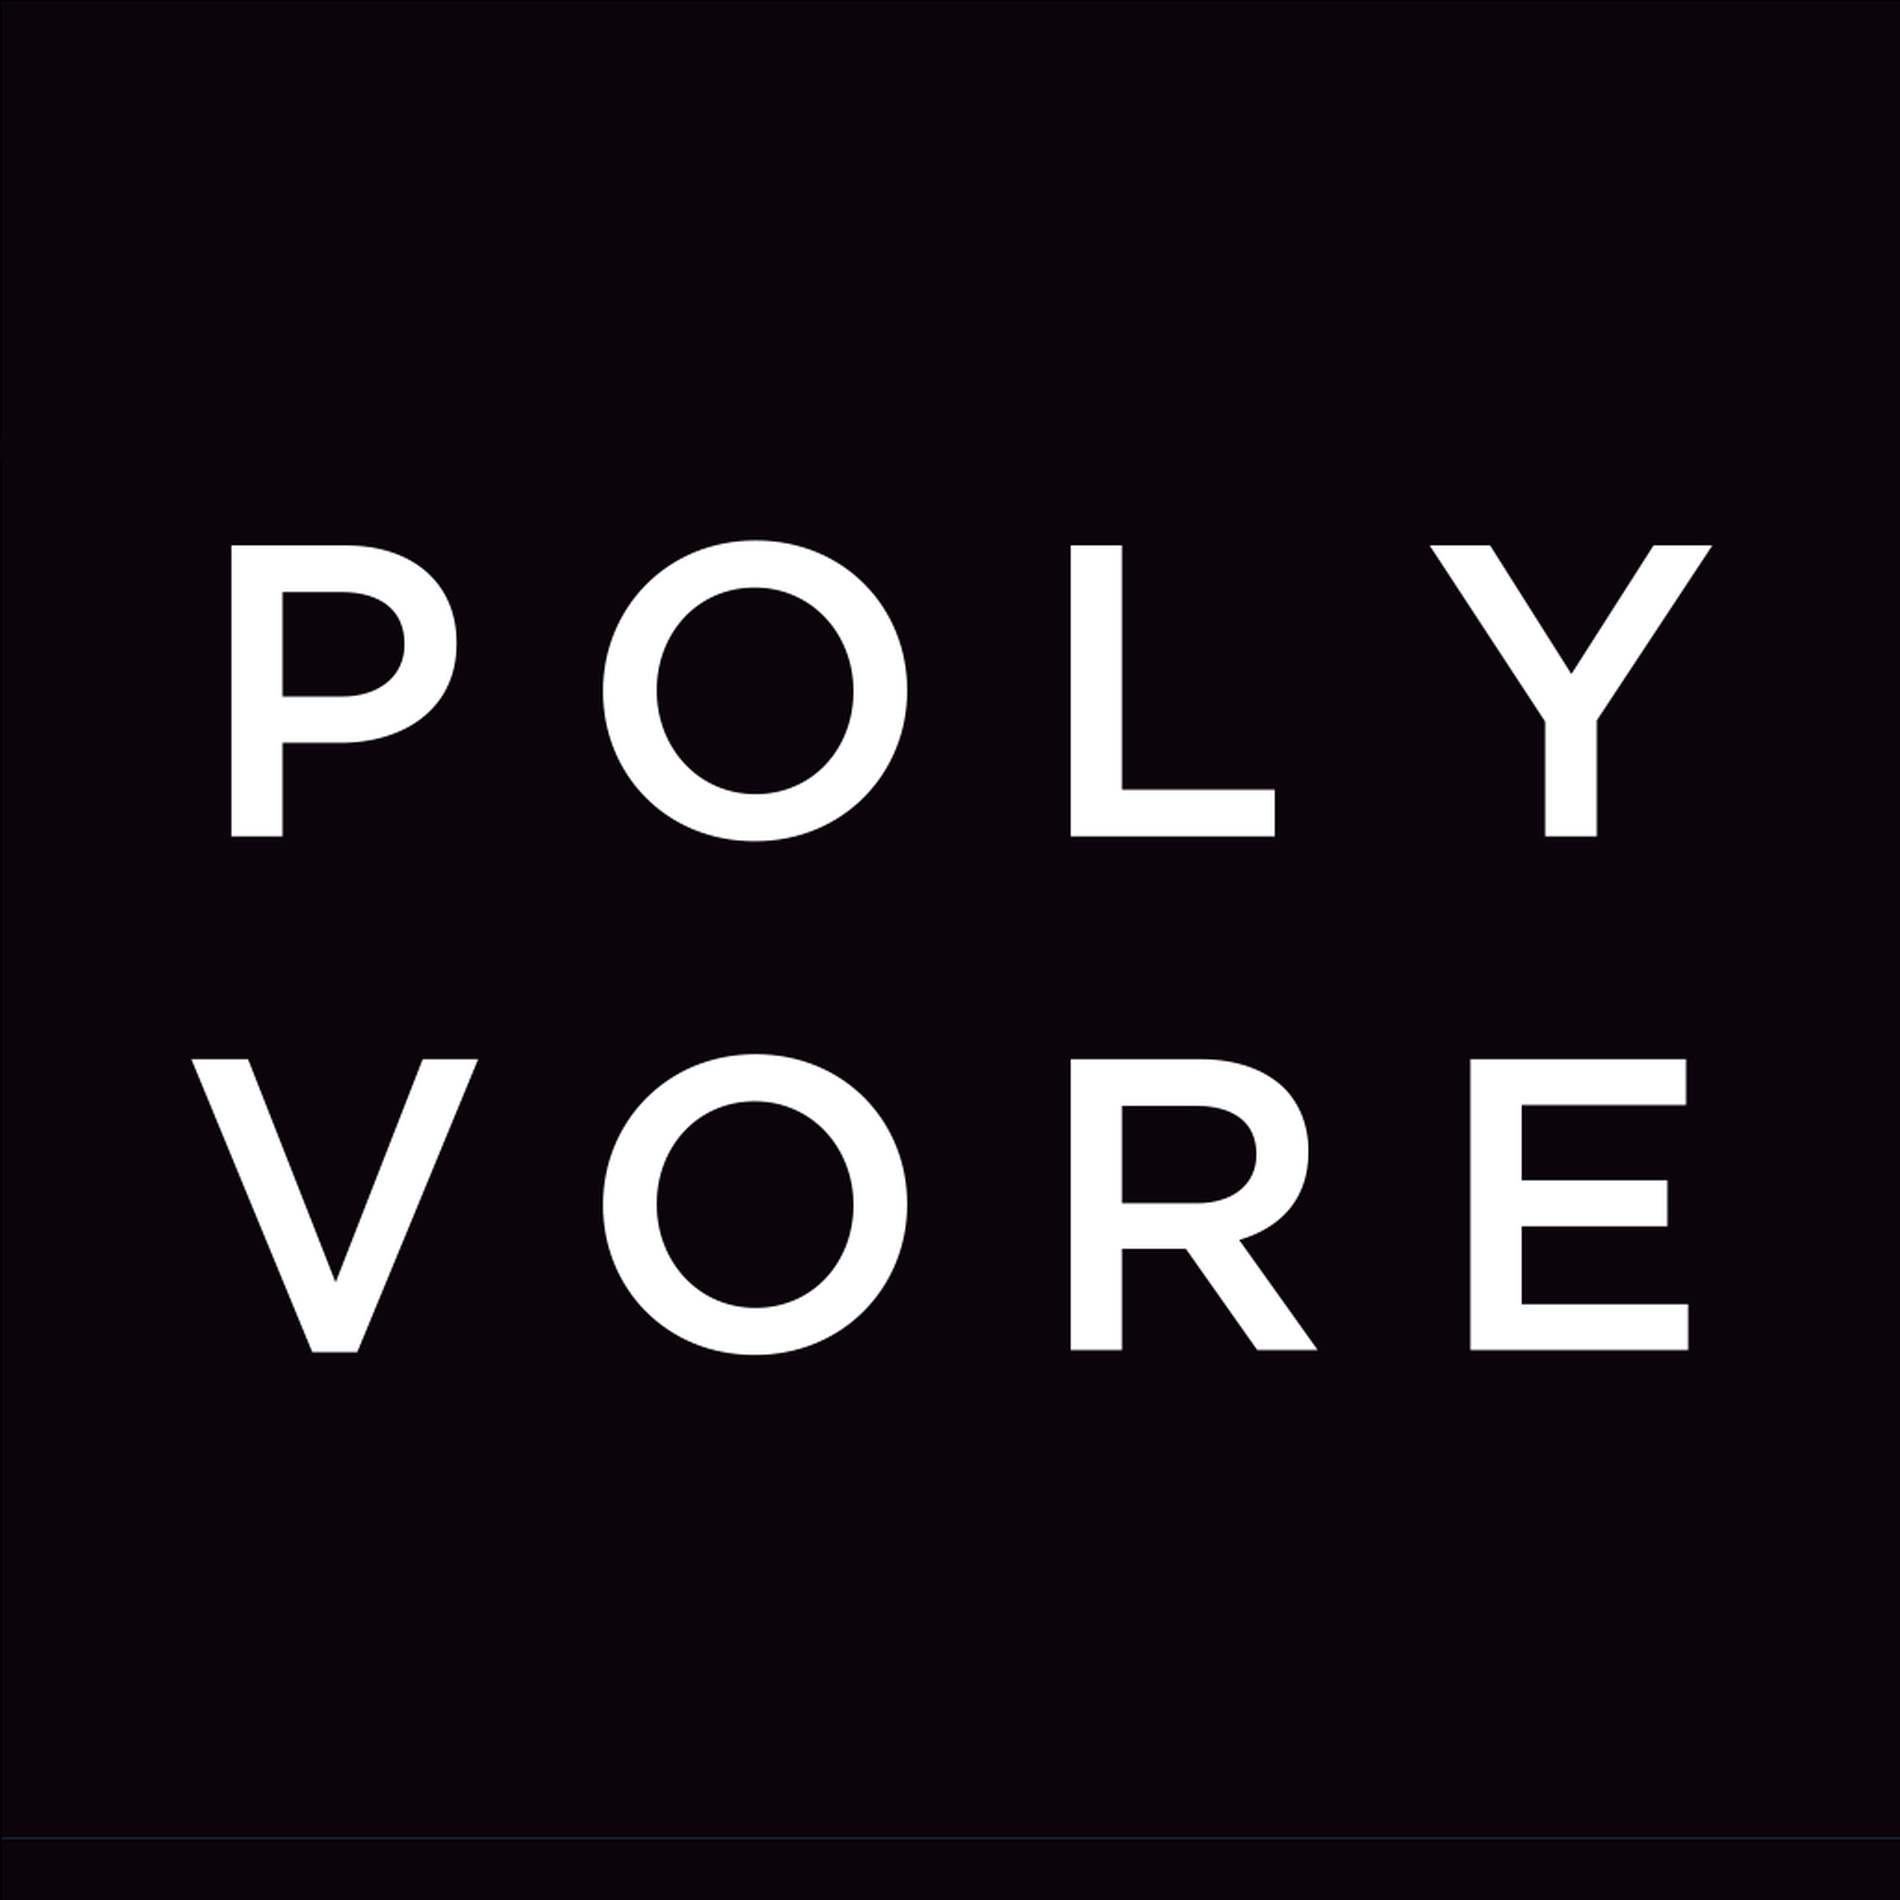 polyvore-logo-large